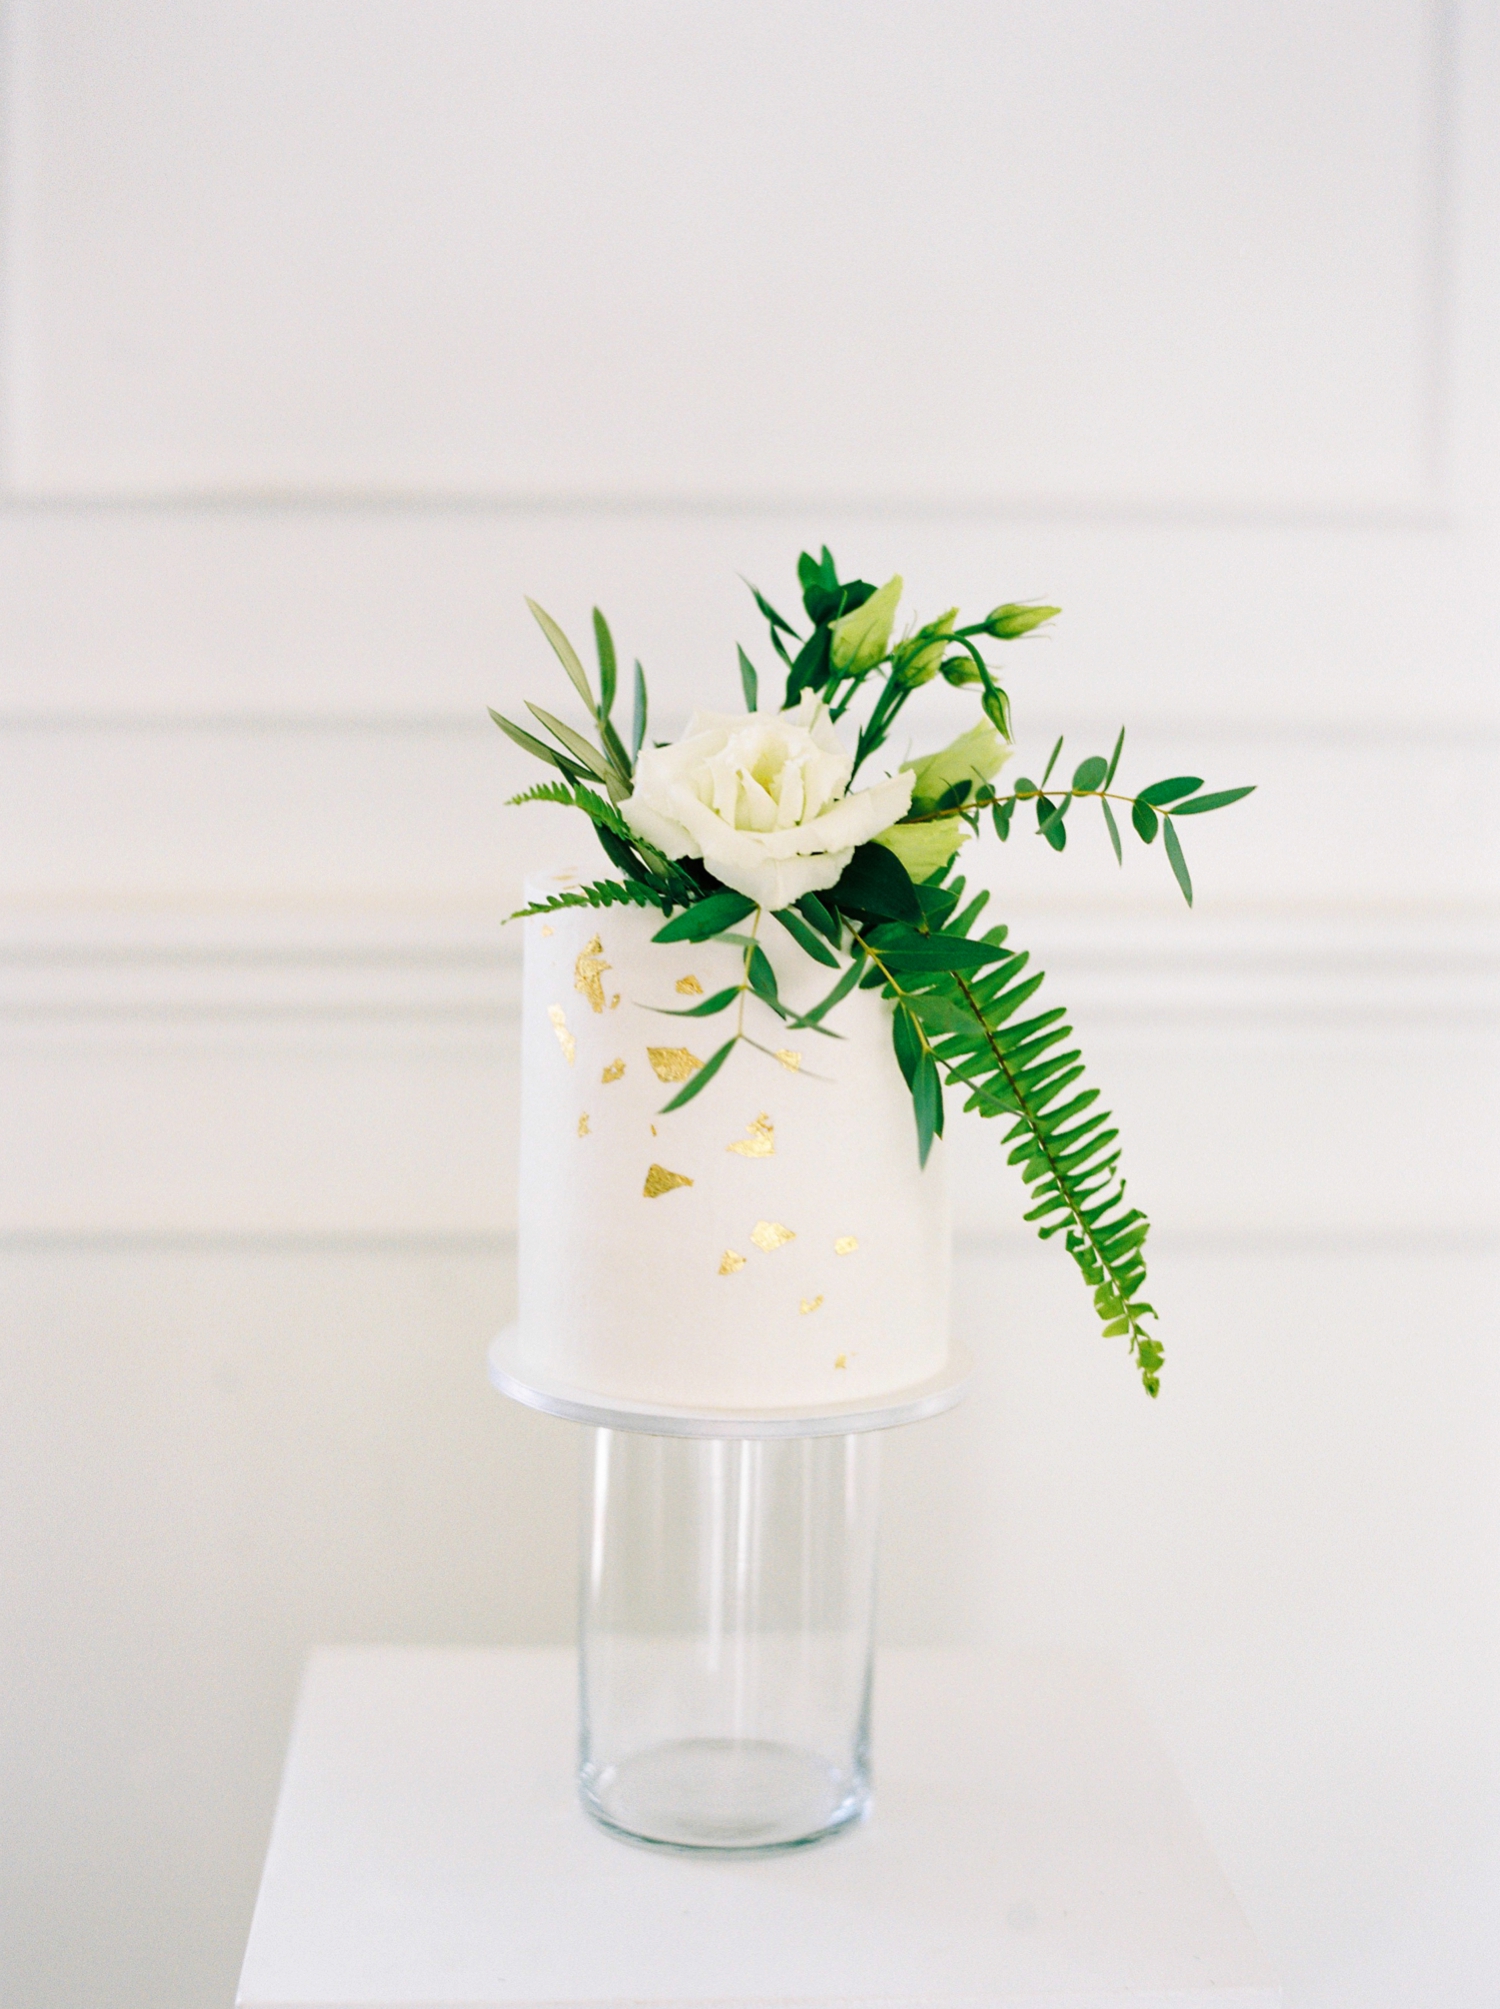 Calgary wedding photographers | fine art film | Justine Milton Photography | wedding details | editorial | wedding inspiration | wedding cake